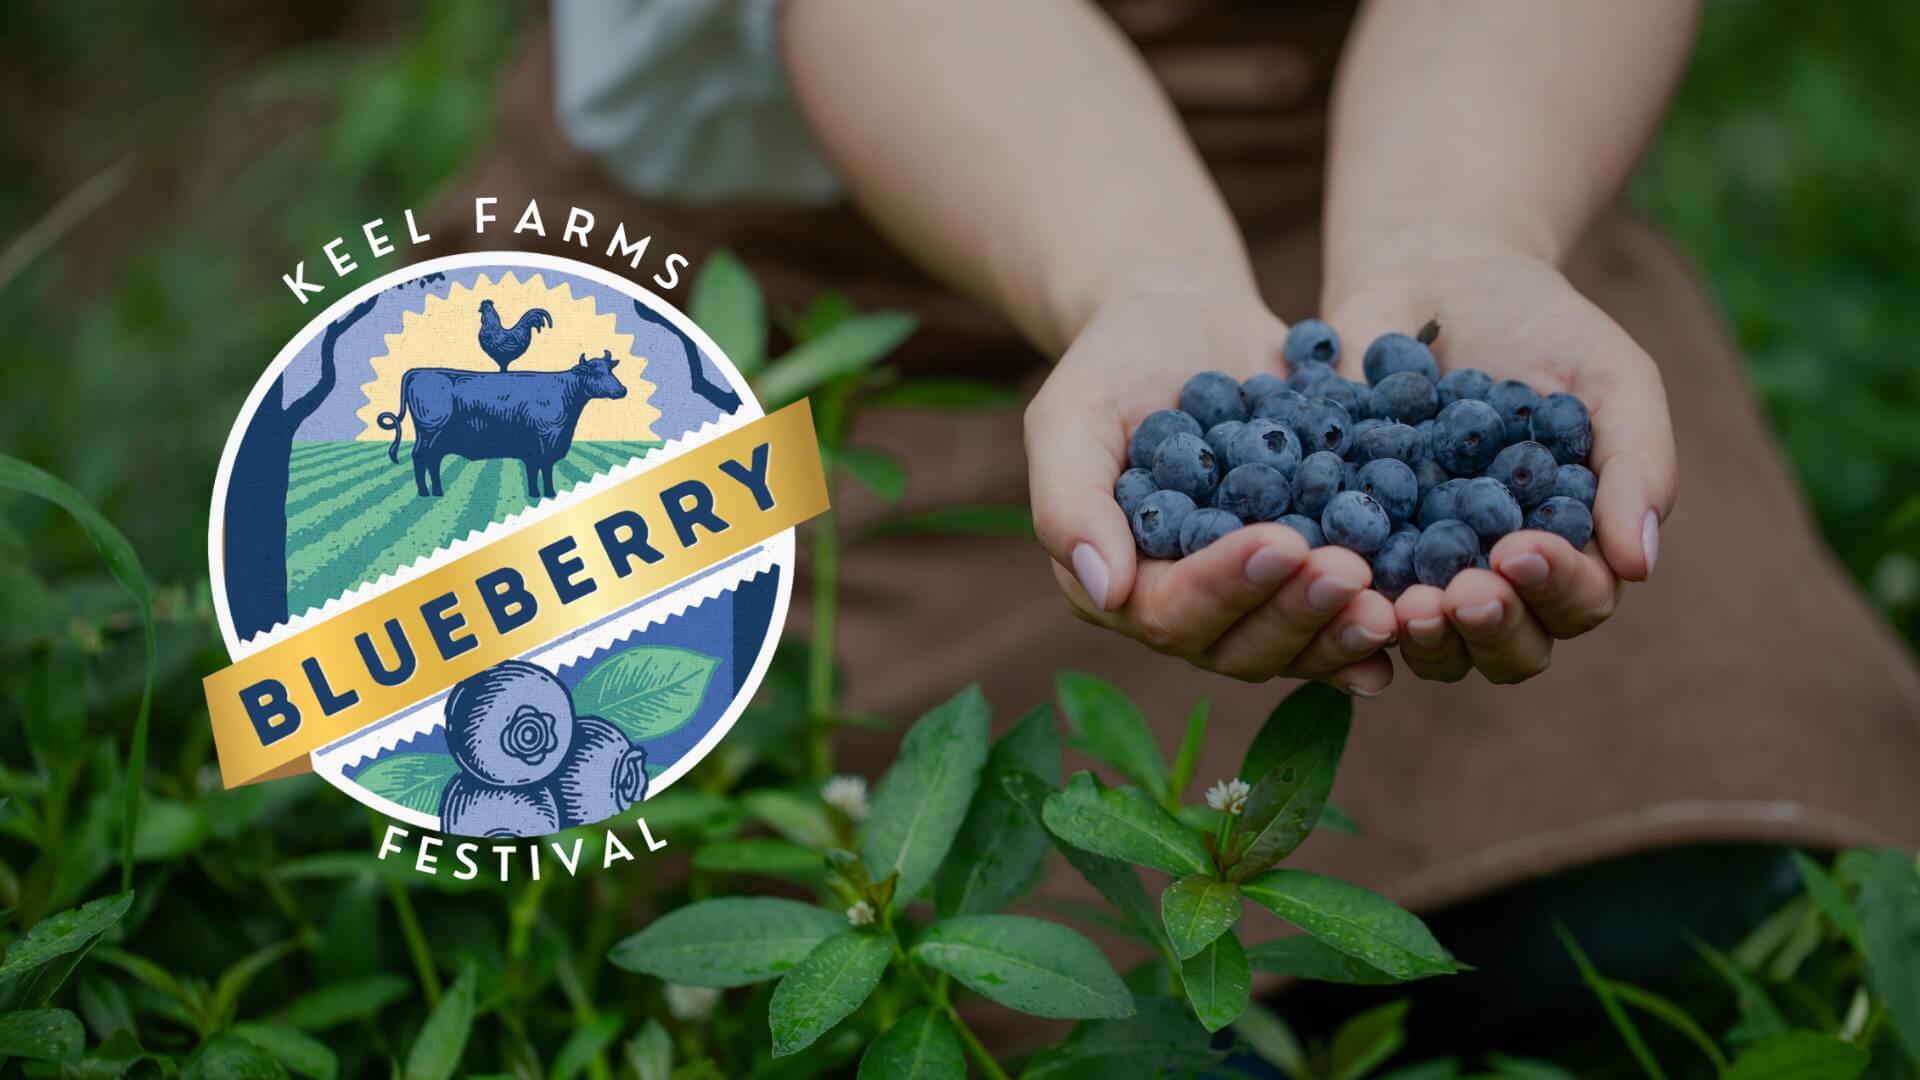 Keel Farms Blueberry Festival